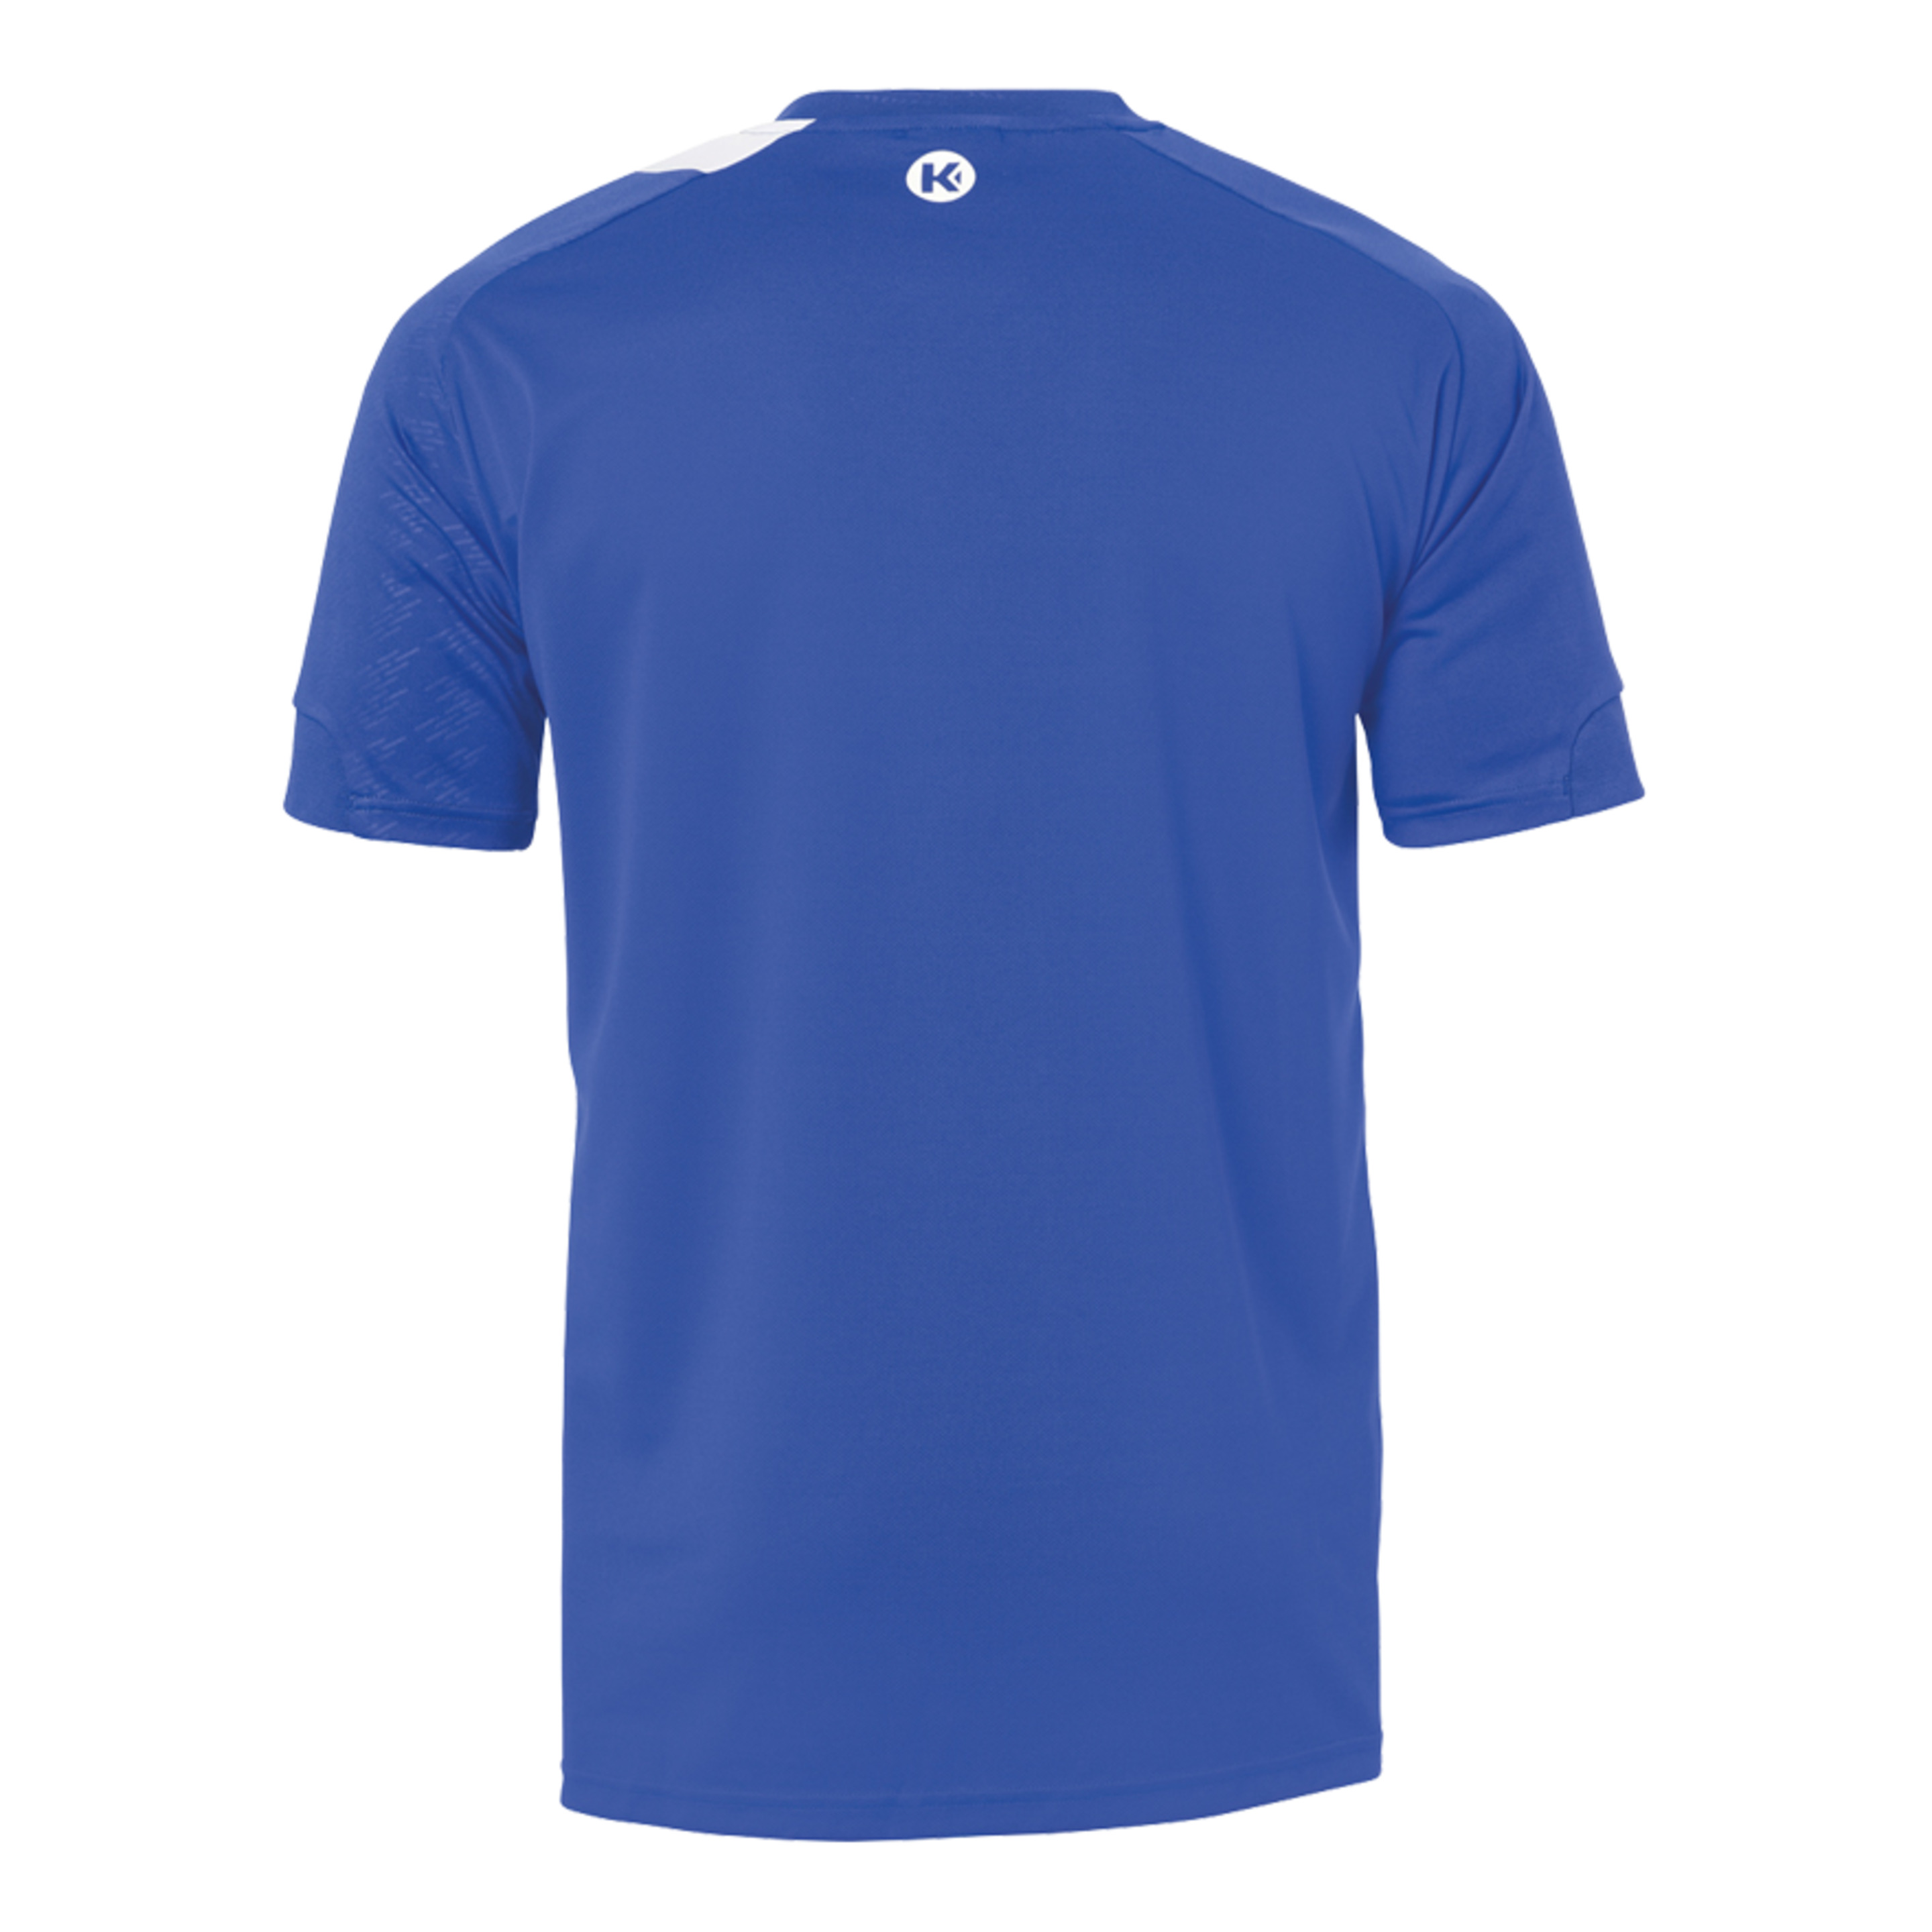 Peak Camiseta Azul Royal/blanco Kempa - azul - Peak Camiseta Azul Royal/blanco Kempa  MKP